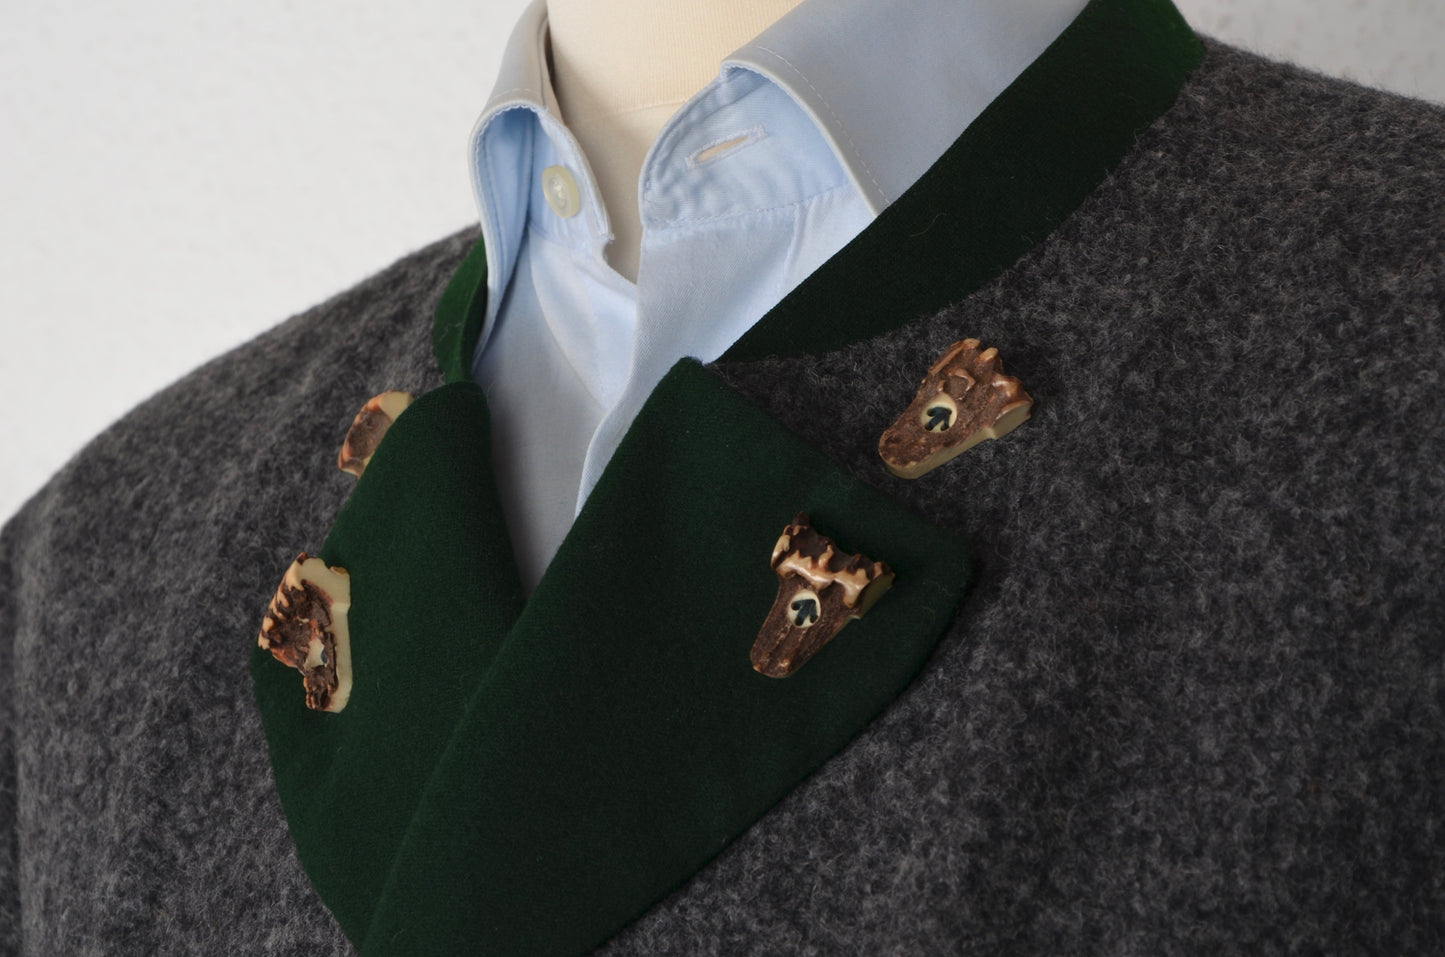 Habsburg Kleider Baby Alpaca Janker/Traditional Jacket Size 54 - Grey